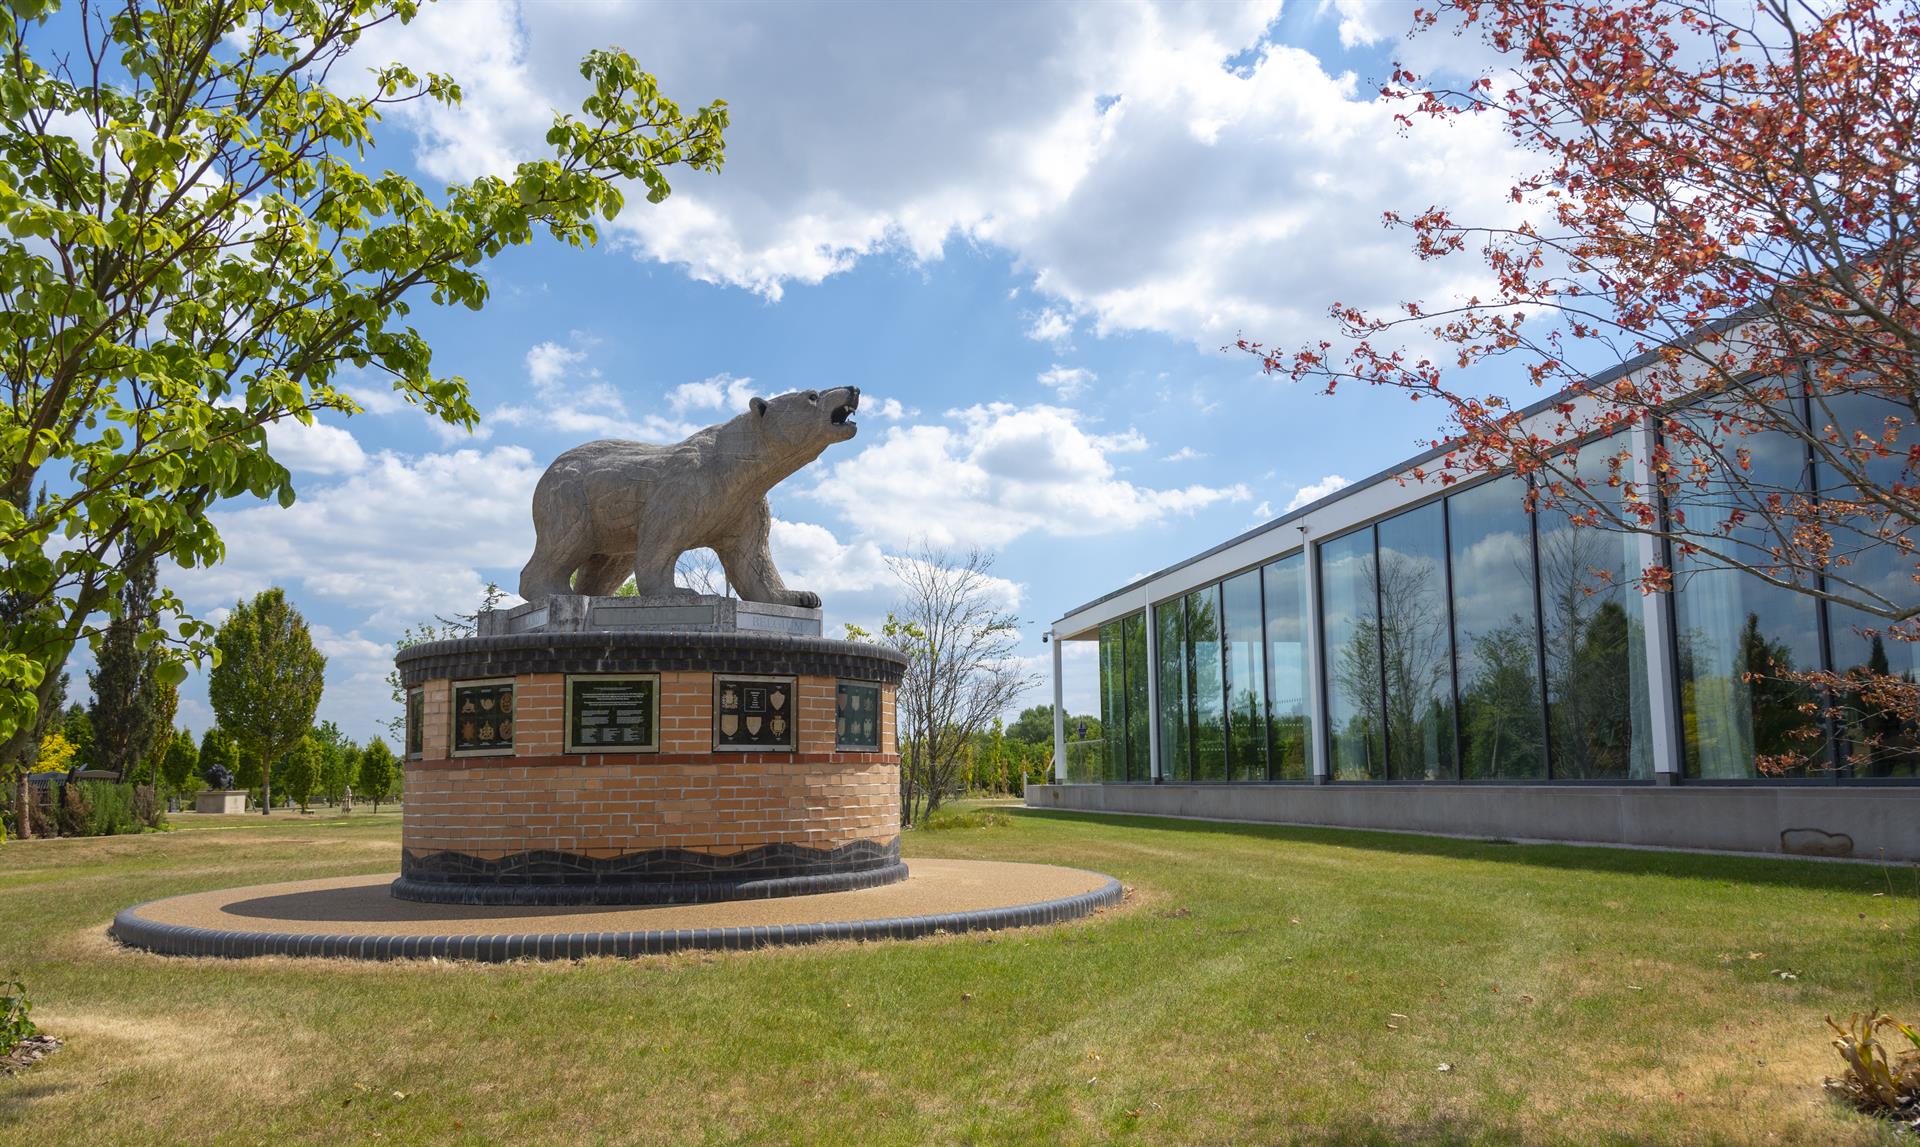 Aspects Event Building and Polar Bear Memorial